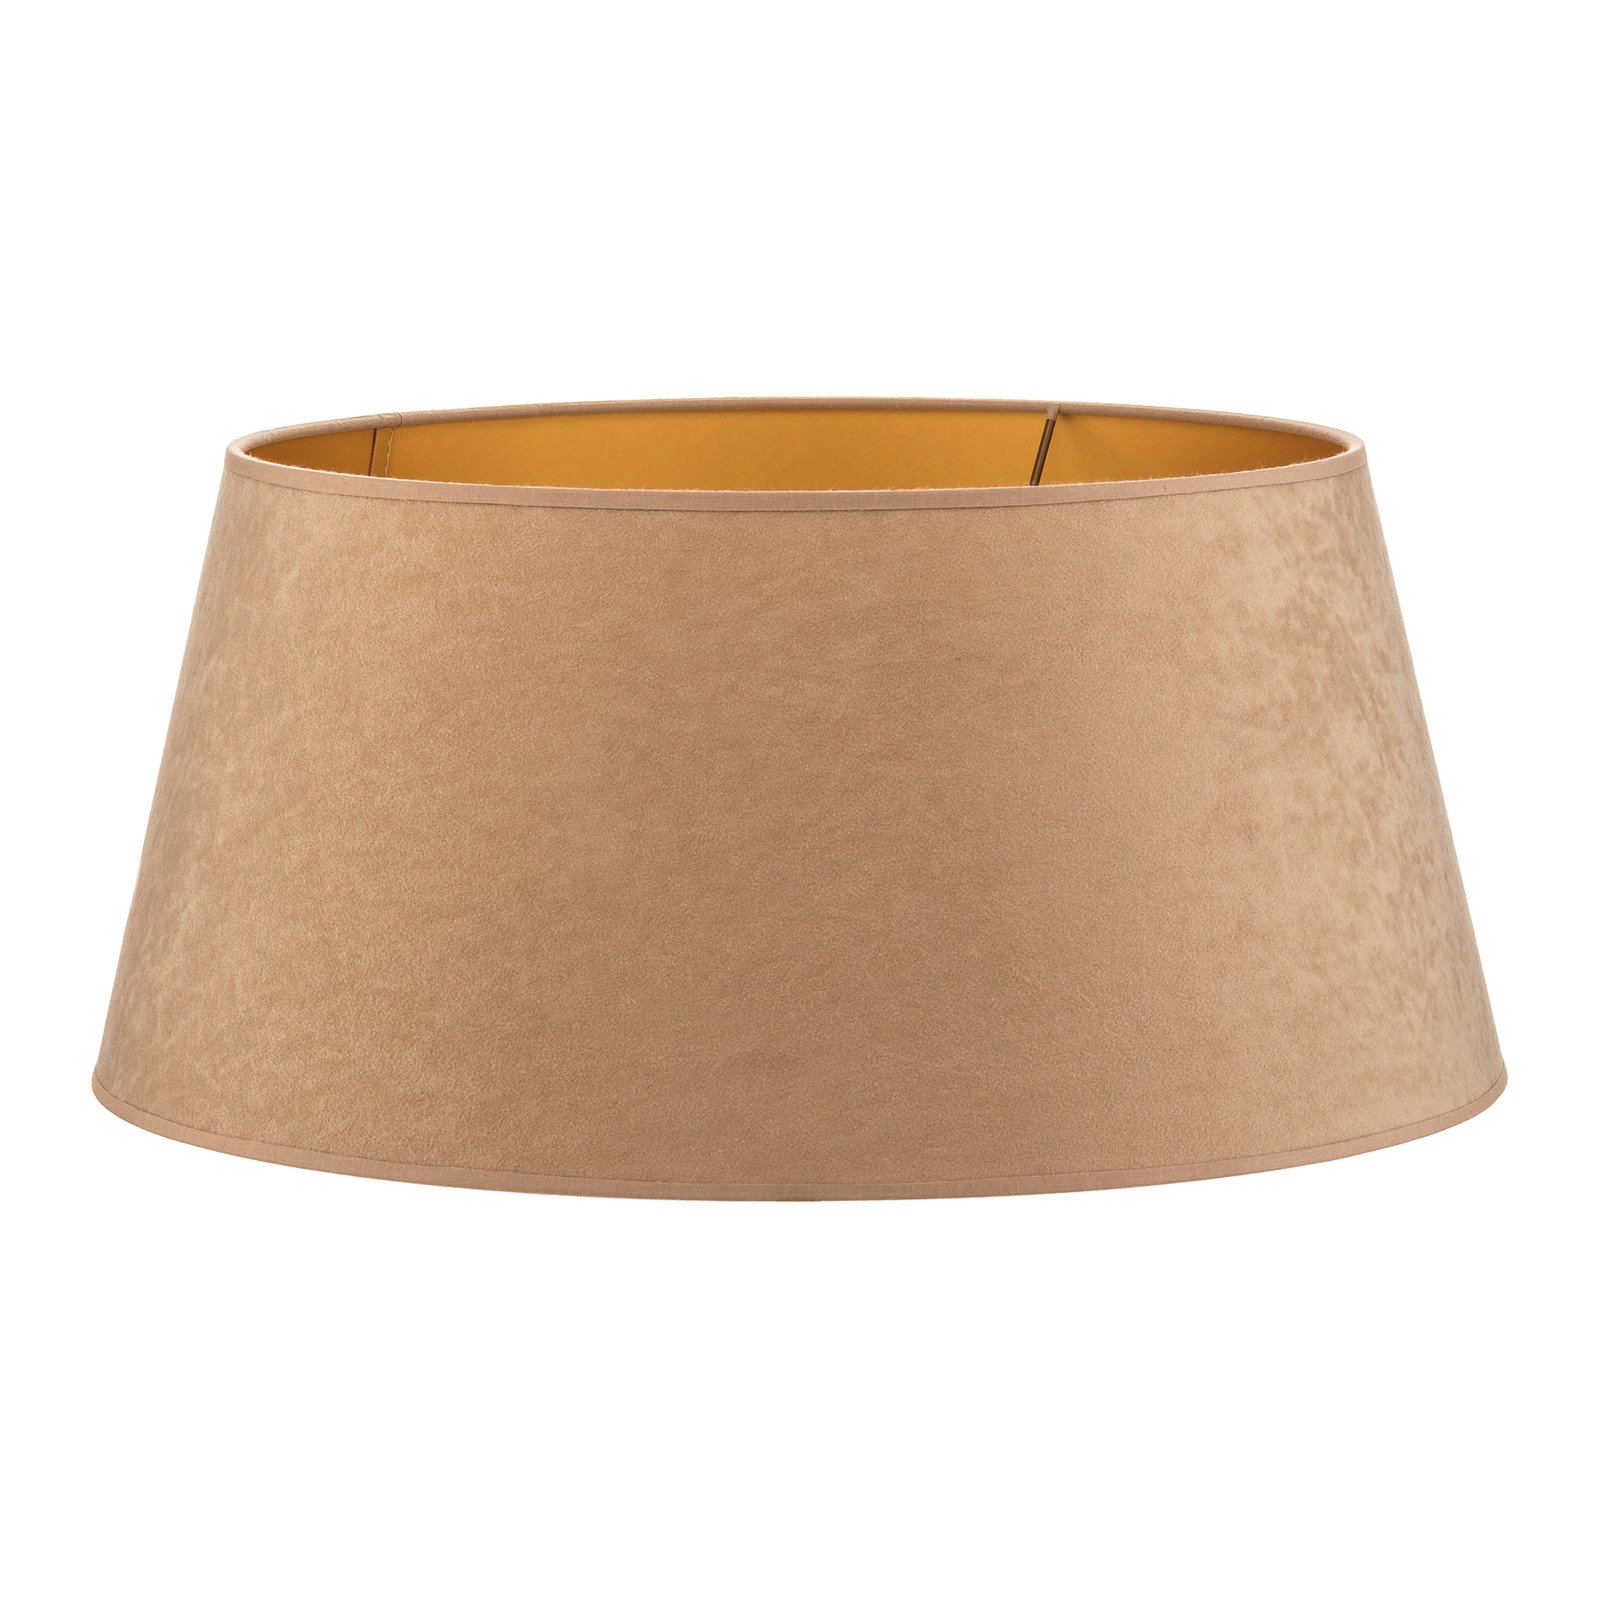 Lampenschirm Cone Höhe 25,5 cm, beige/gold